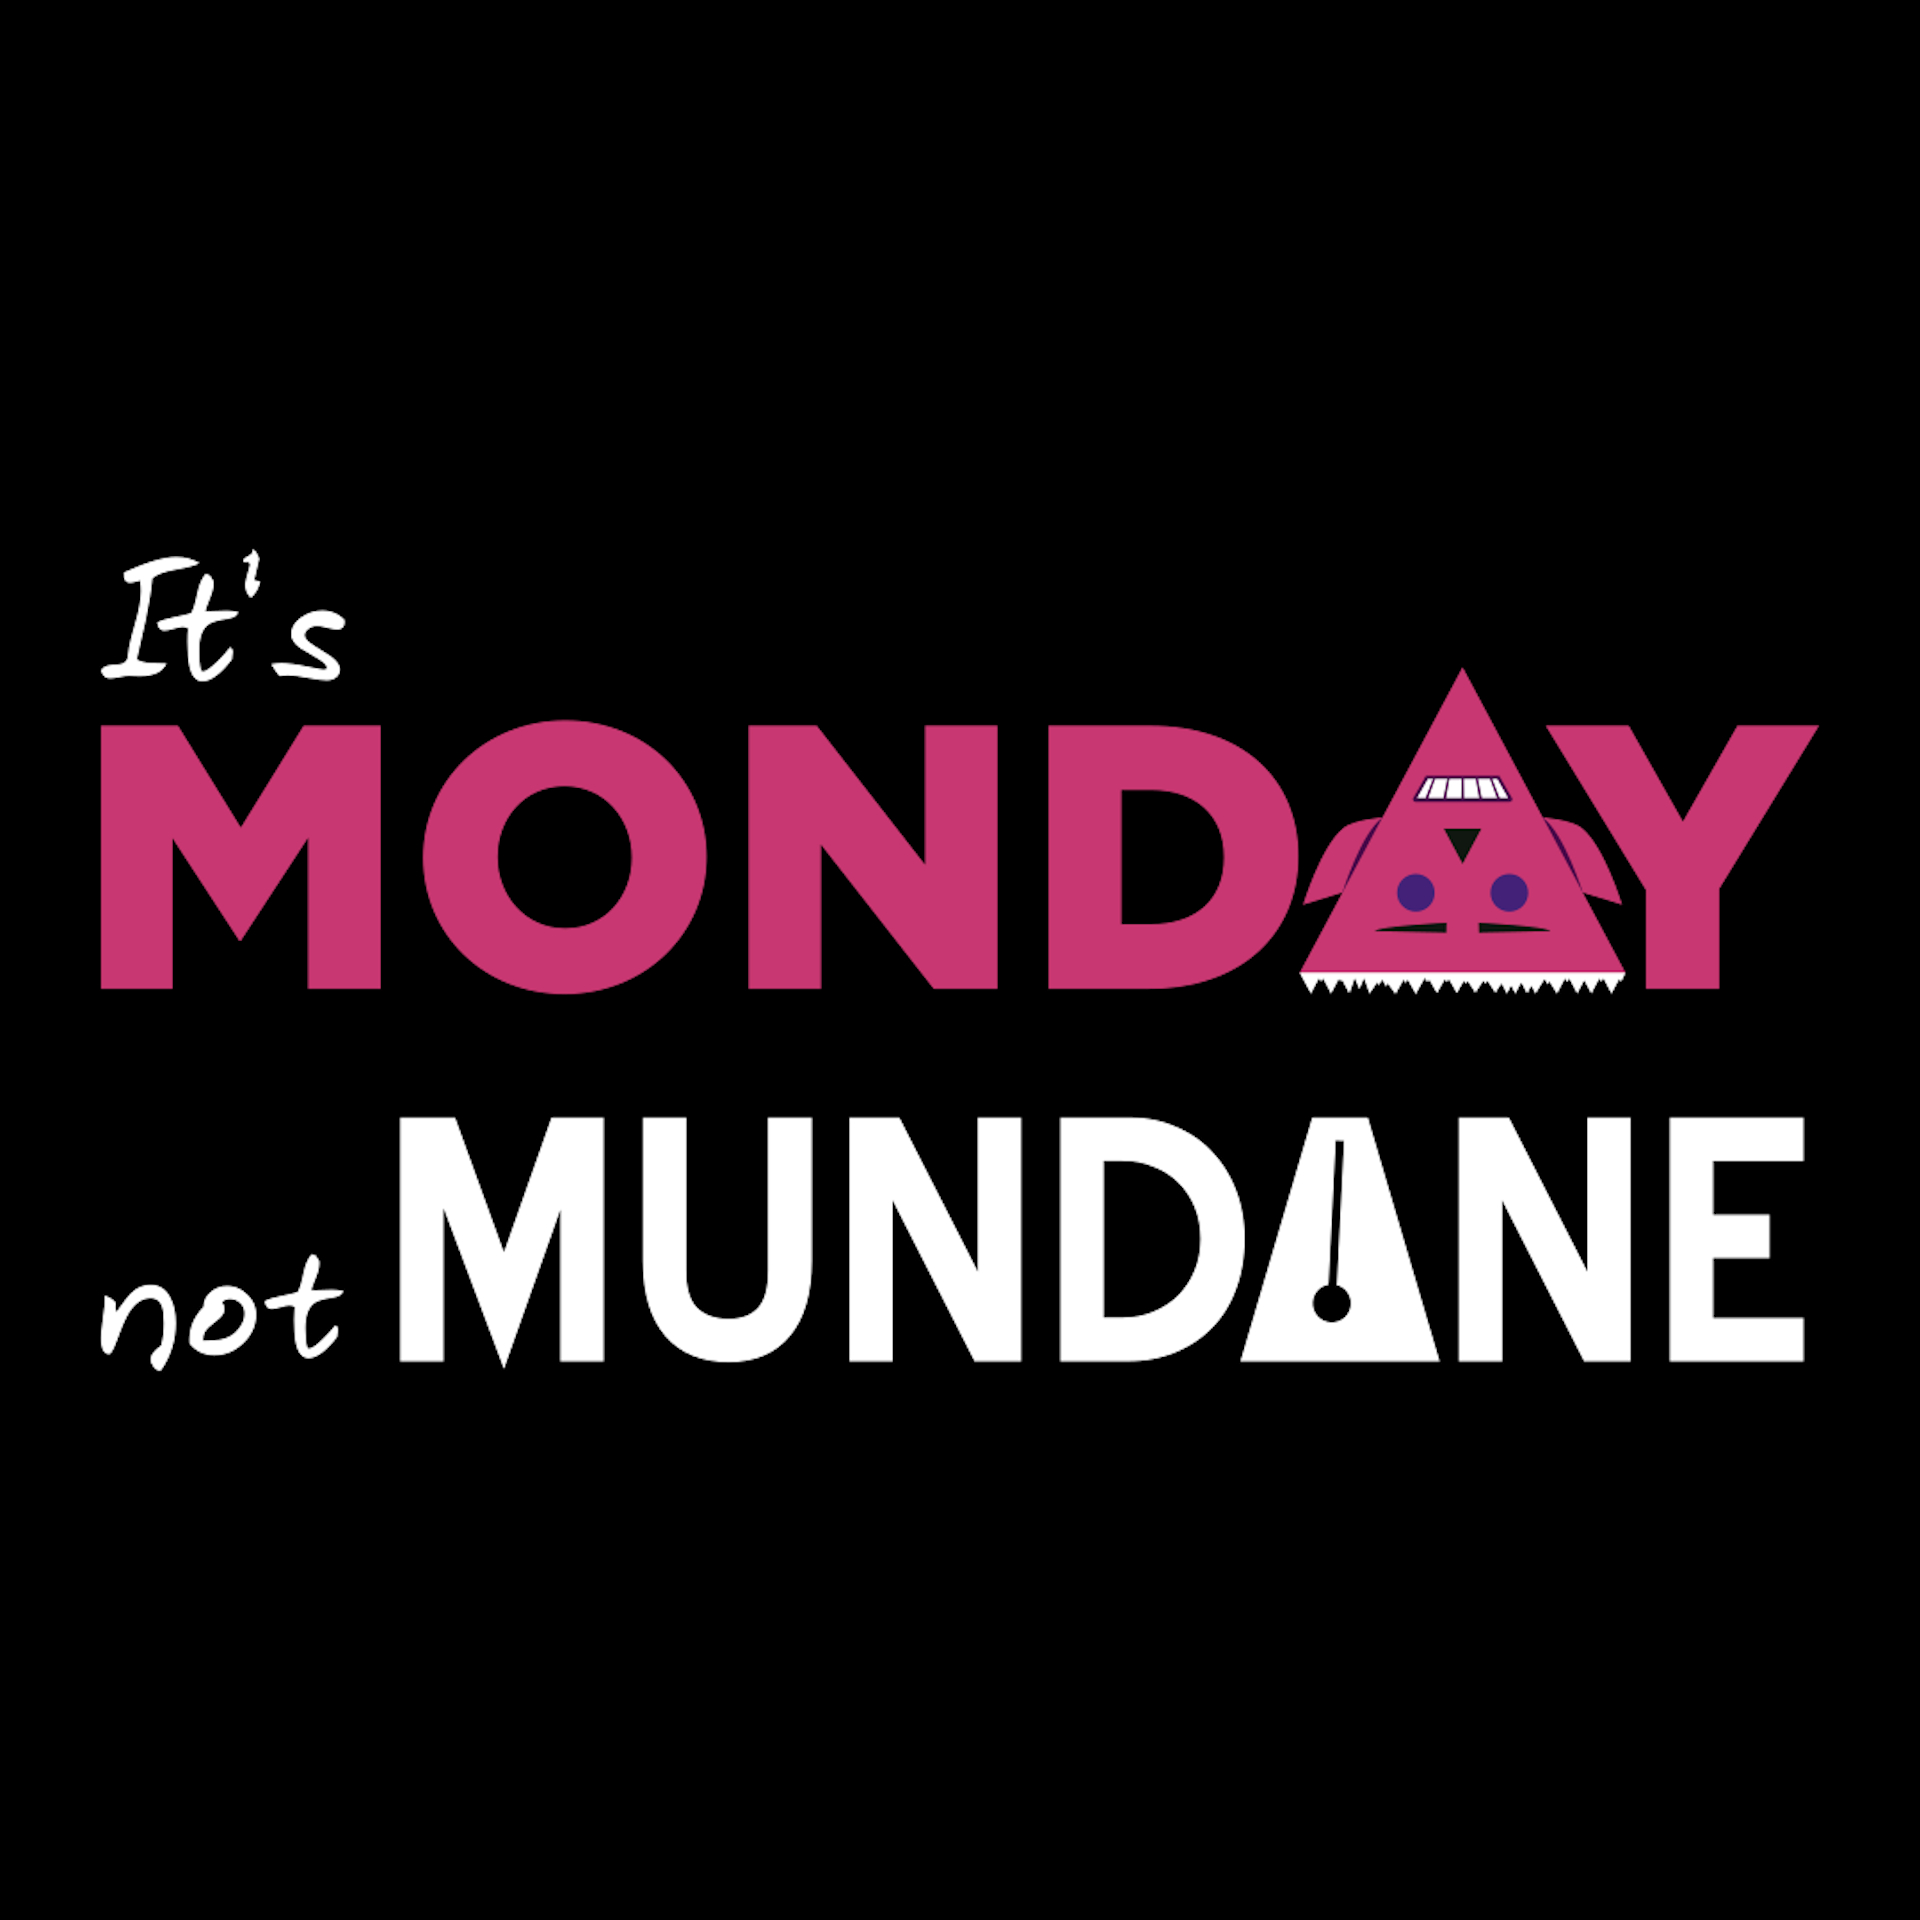 Monday, not mundane